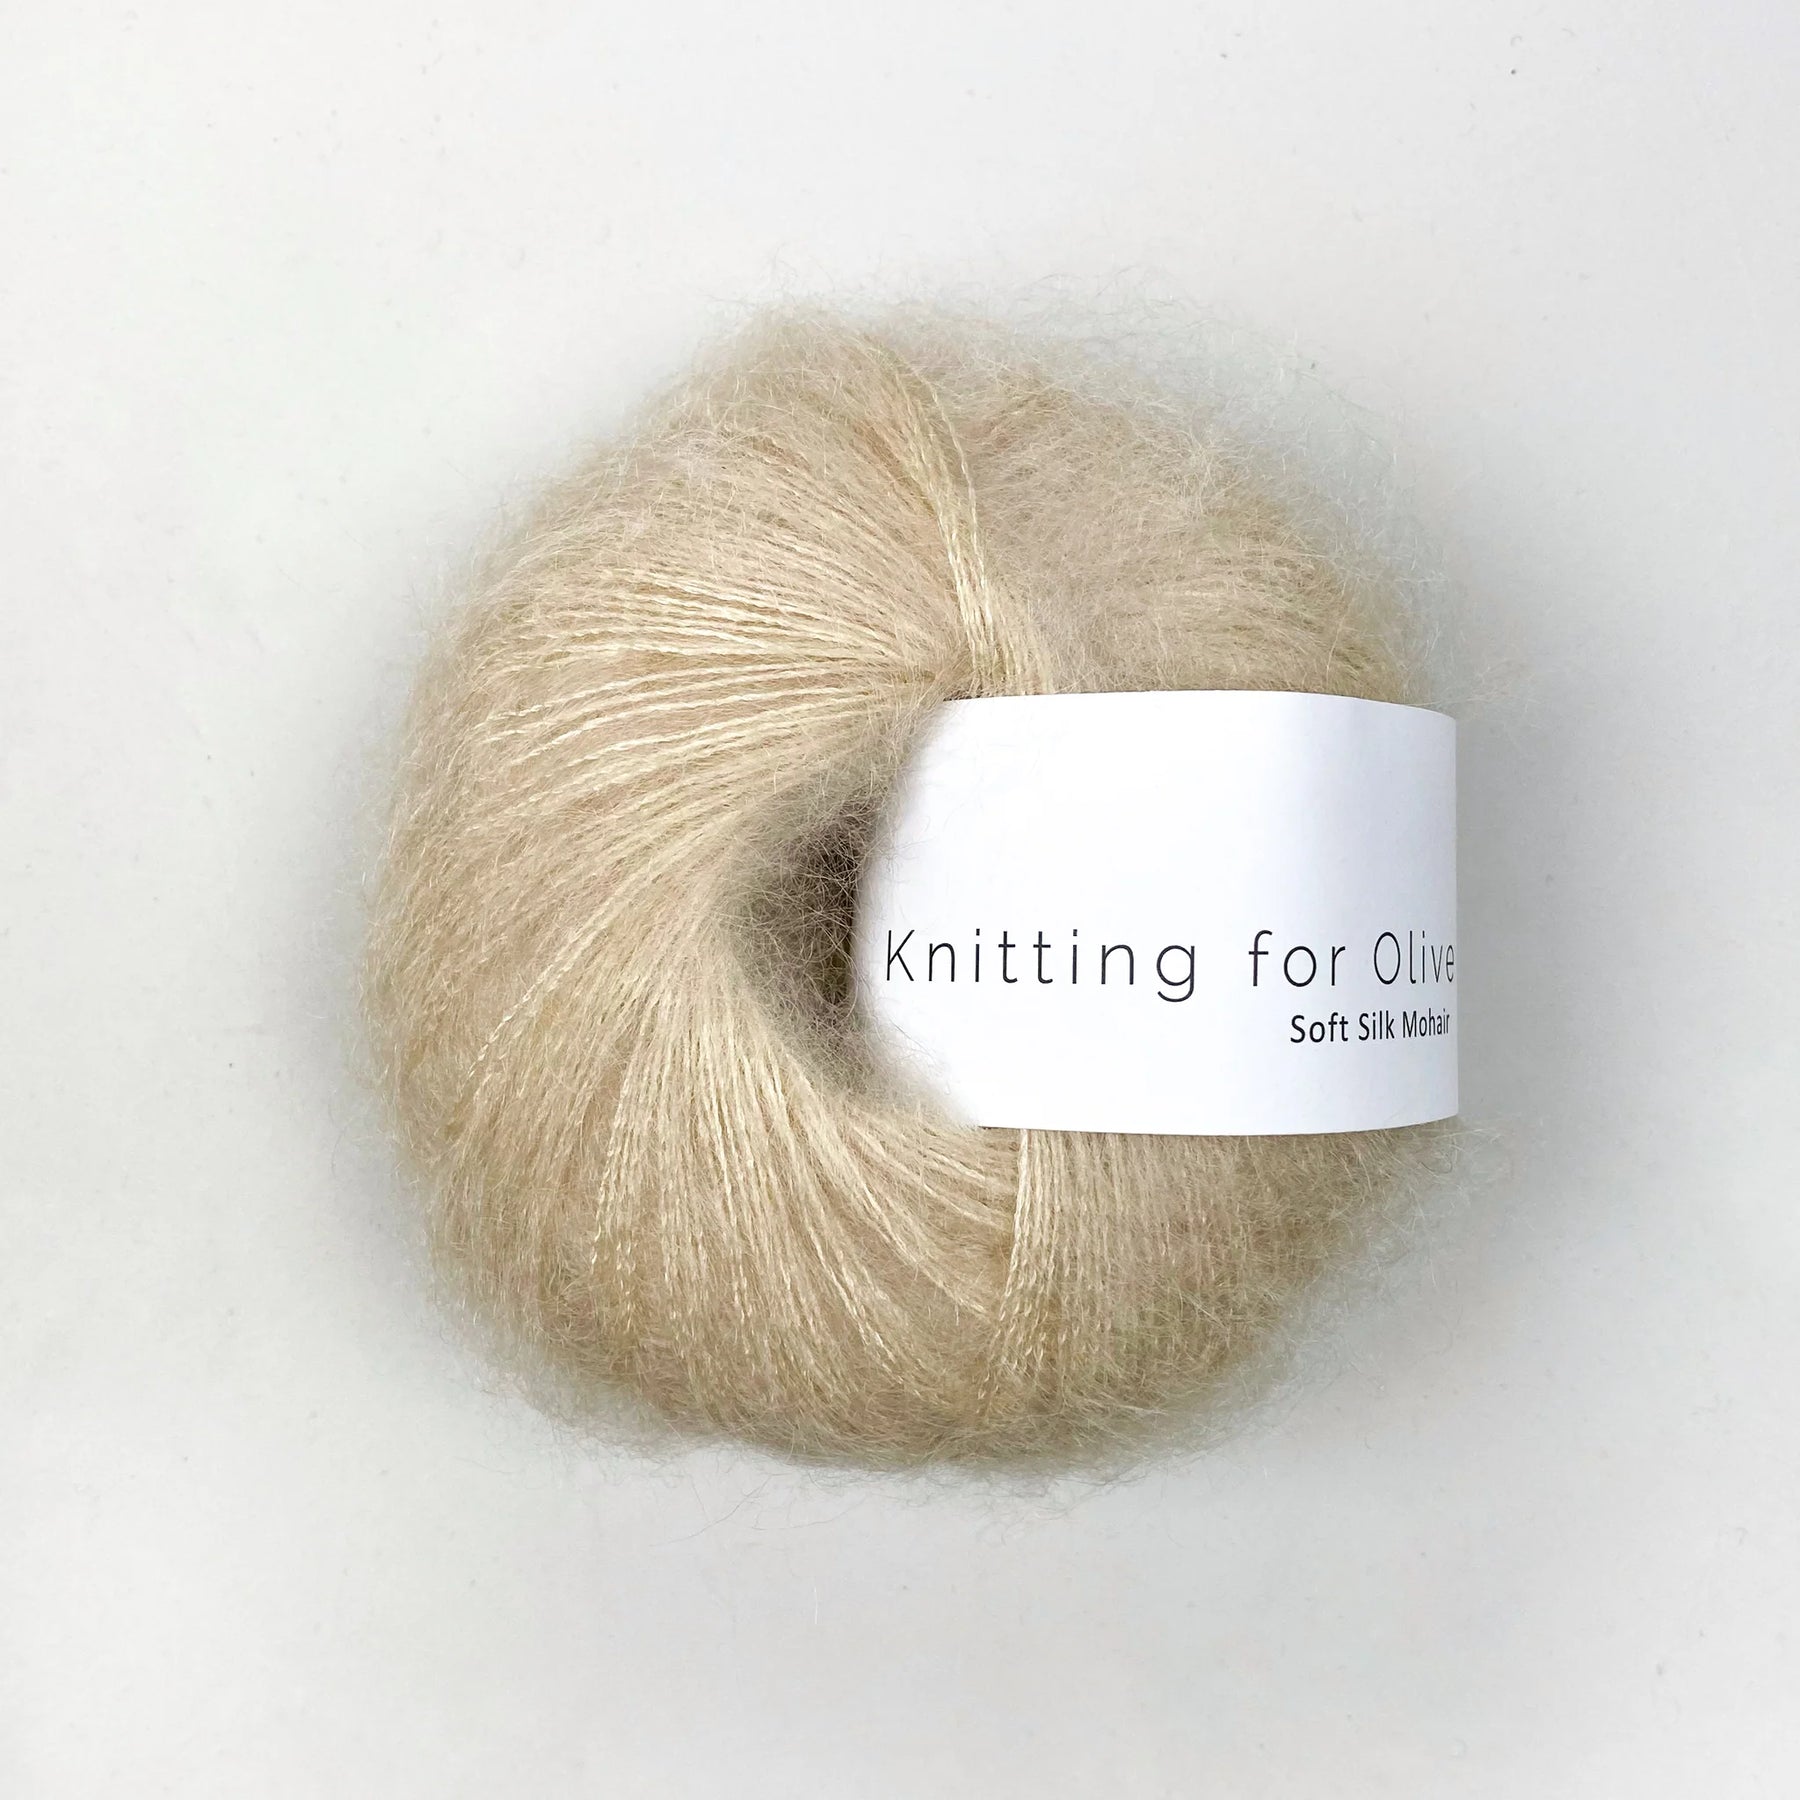 Hvede / Wheat - Soft Silk Mohair